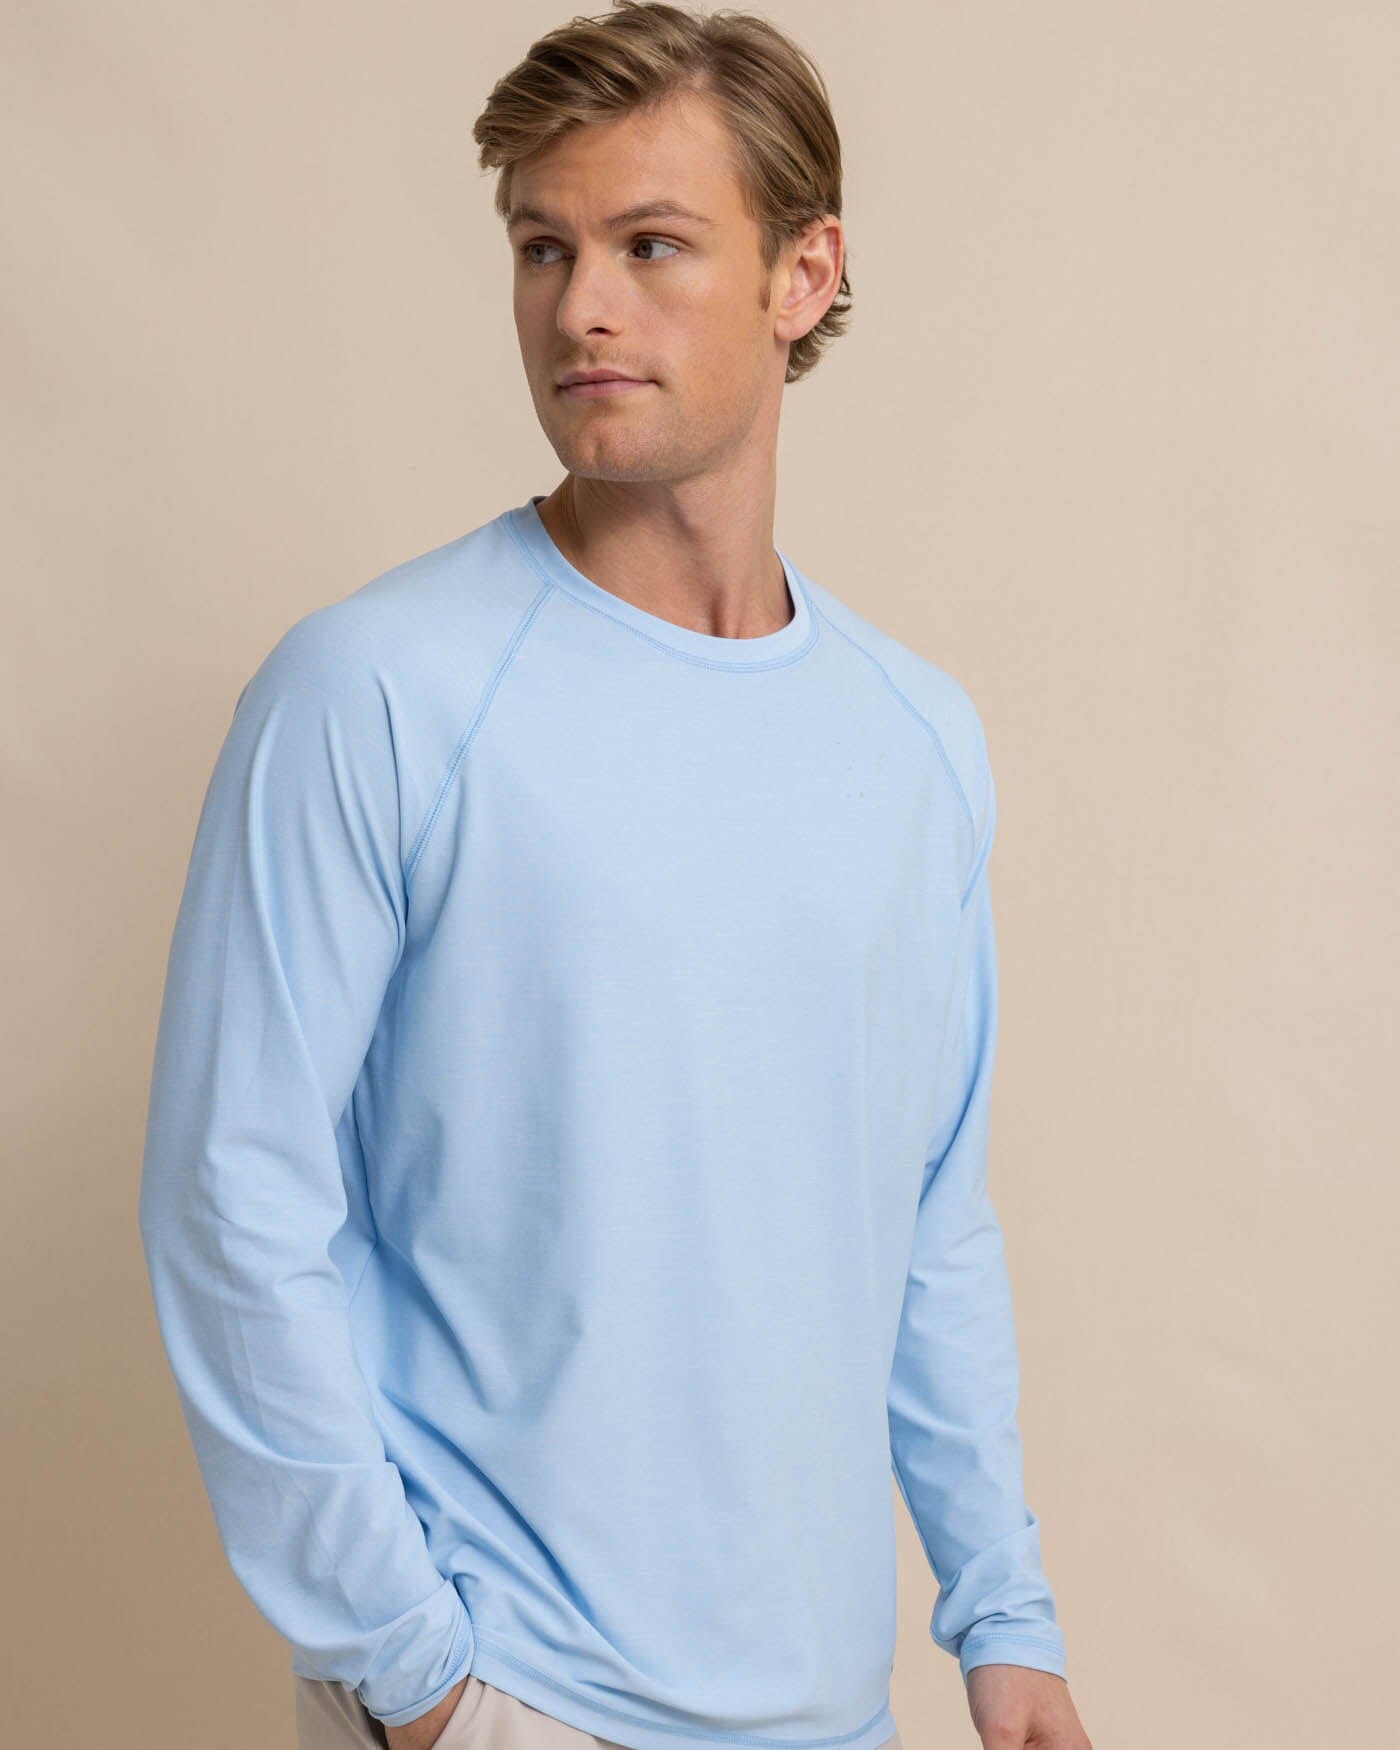 Southern Tide Brrr -illiant Performance Long Sleeve T-Shirt, Mens, S, Platinum Grey